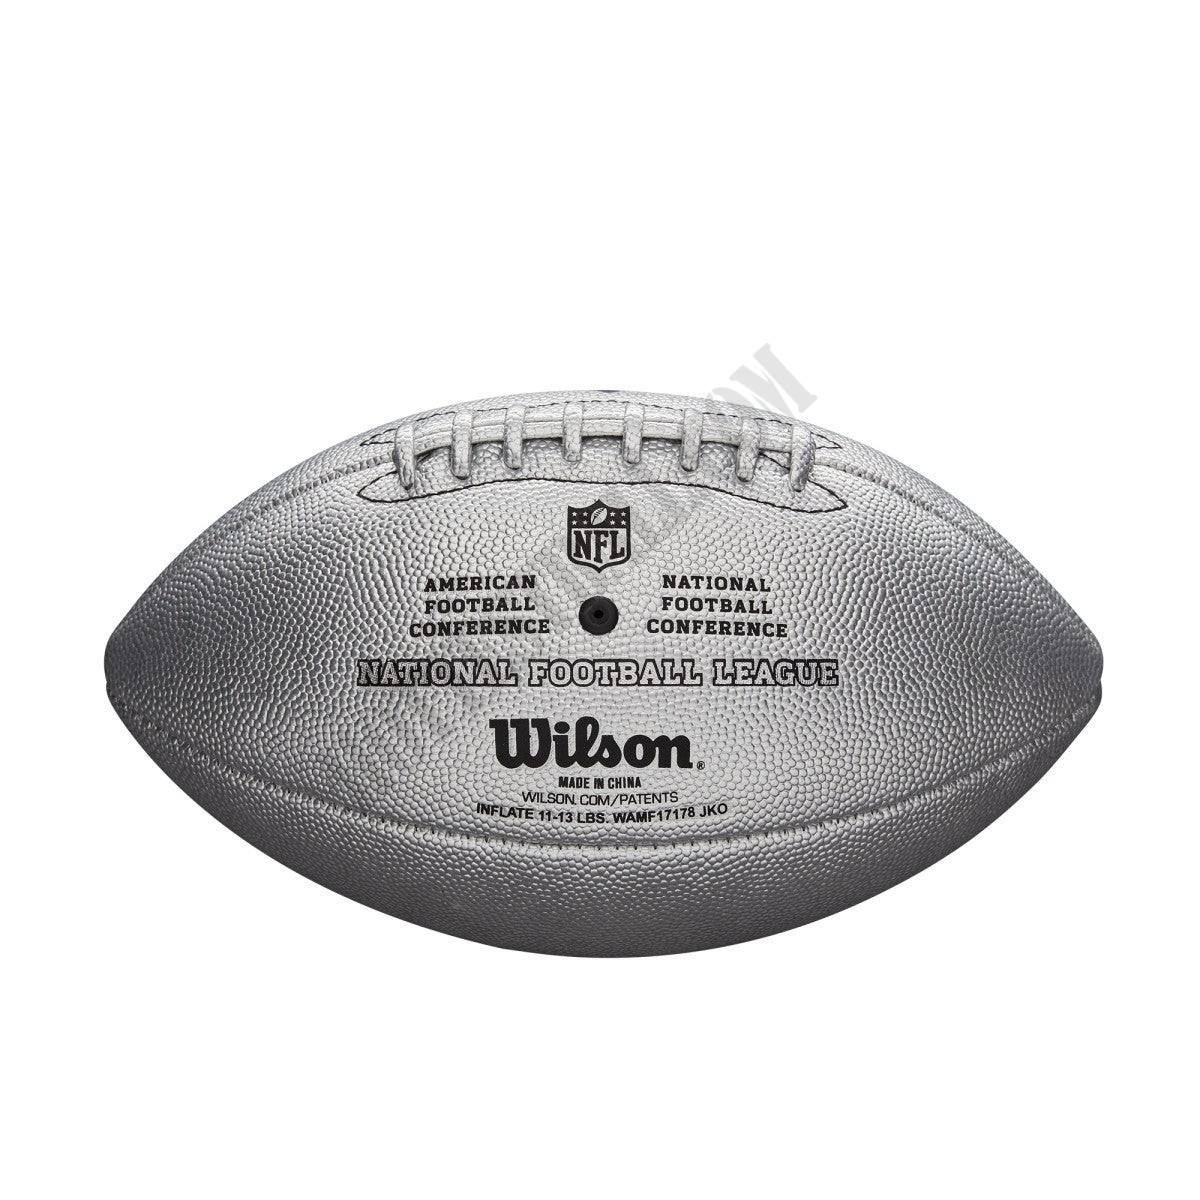 NFL The Duke Metallic Edition - Silver - Wilson Discount Store - -1